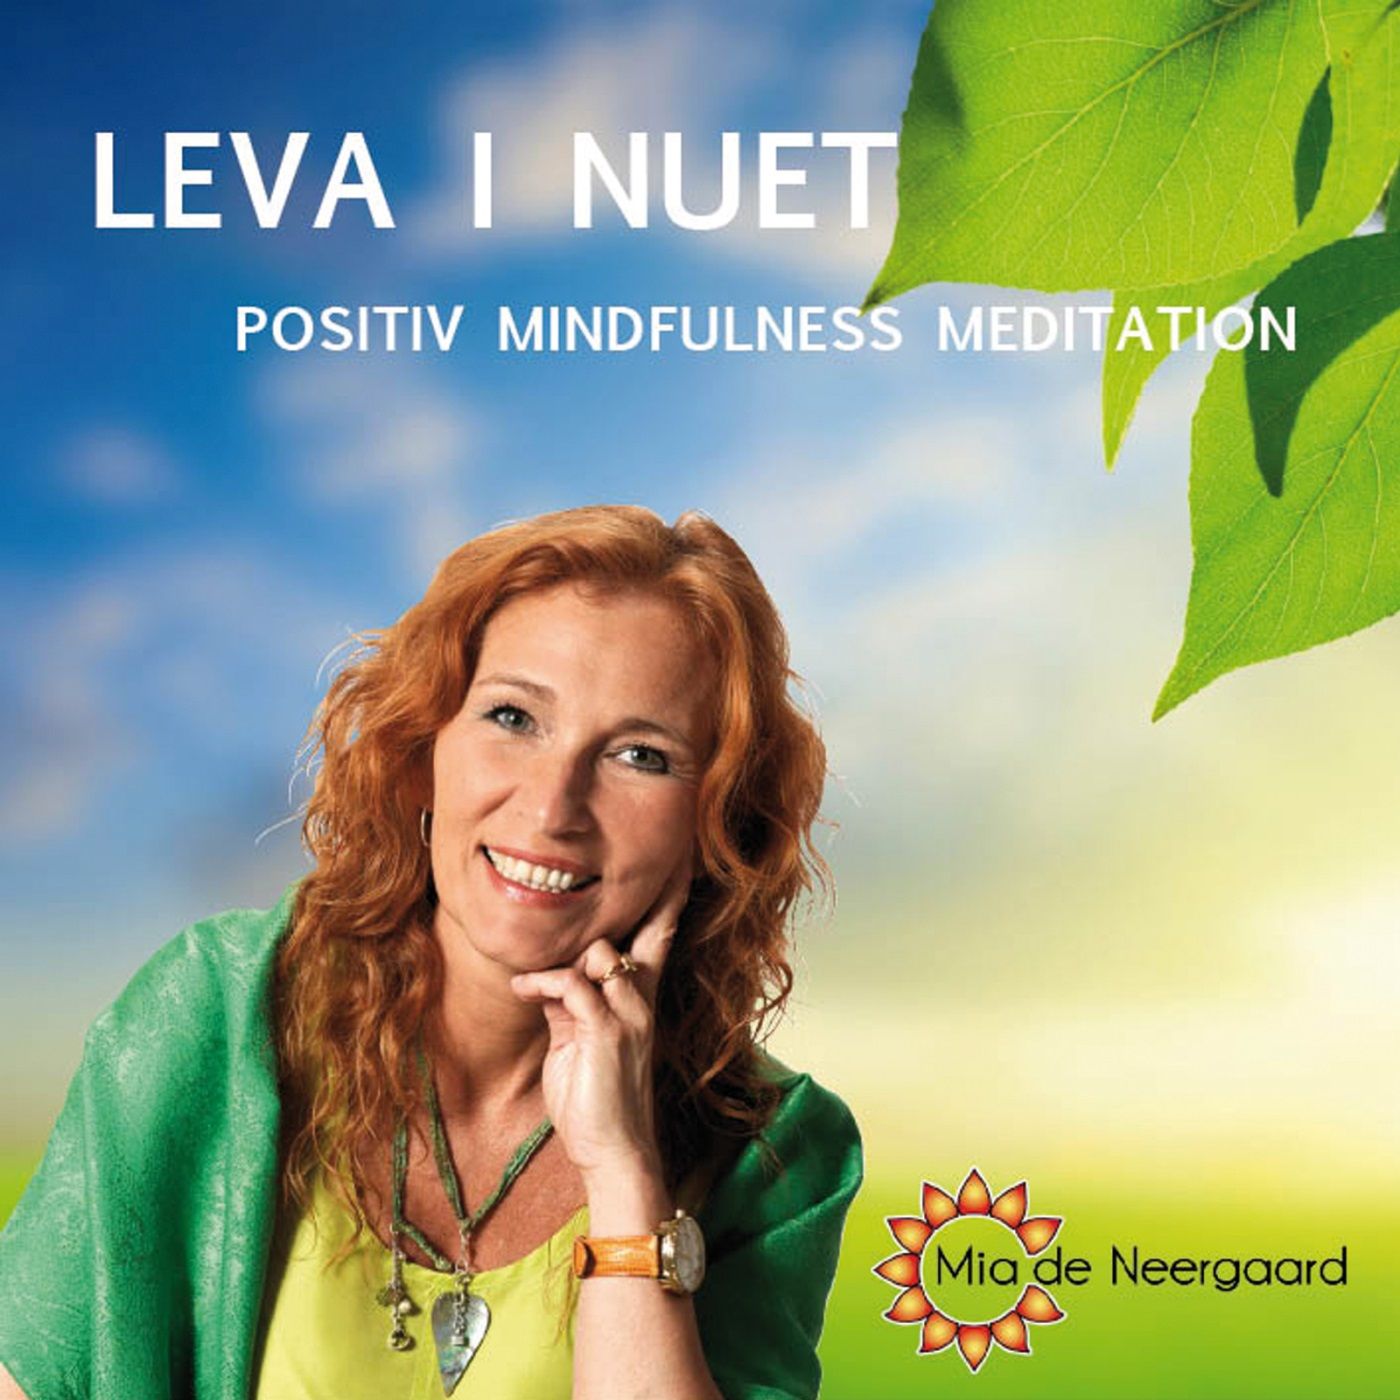 Leva i nuet : positiv mindfullness meditation, audiobook by Mia de Neergaard